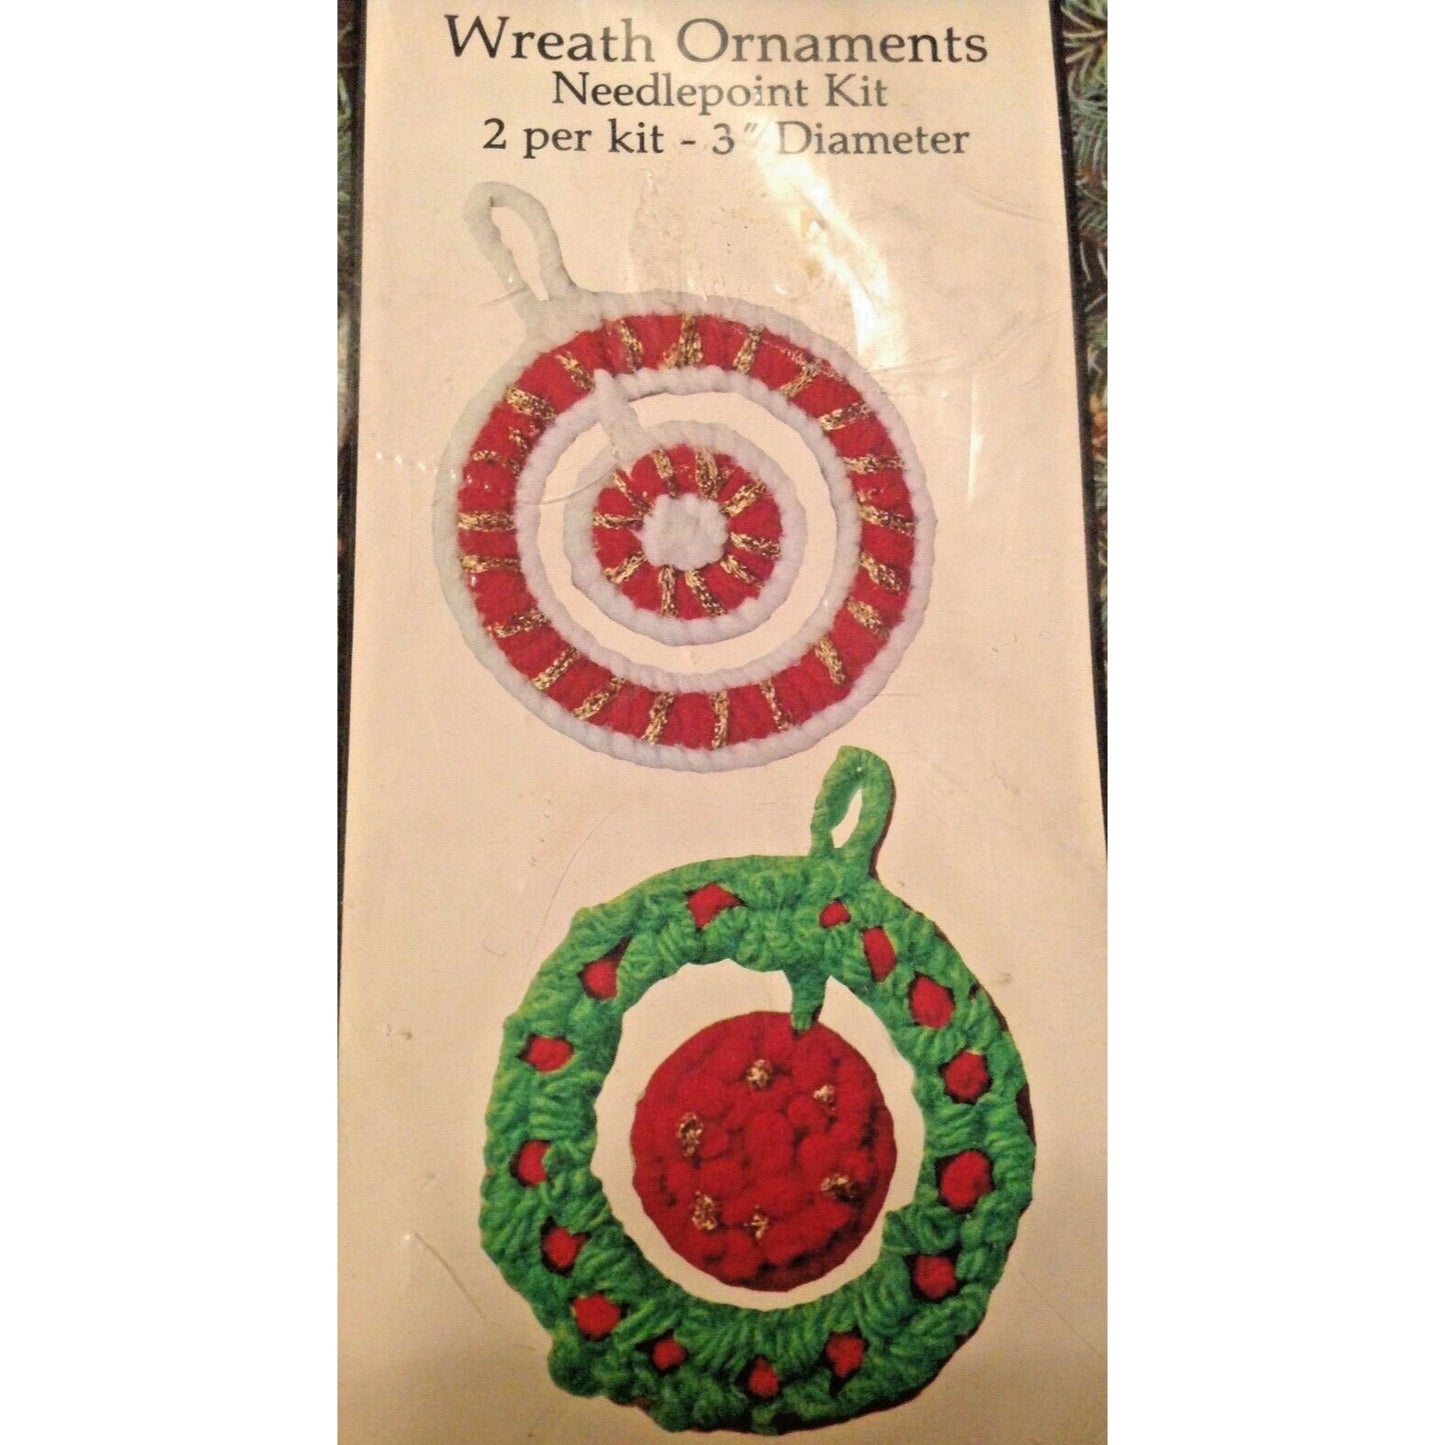 Ornament Caron Wreath 2 per kit 3" Diameter Plastic Needle Point Canvas Yarn